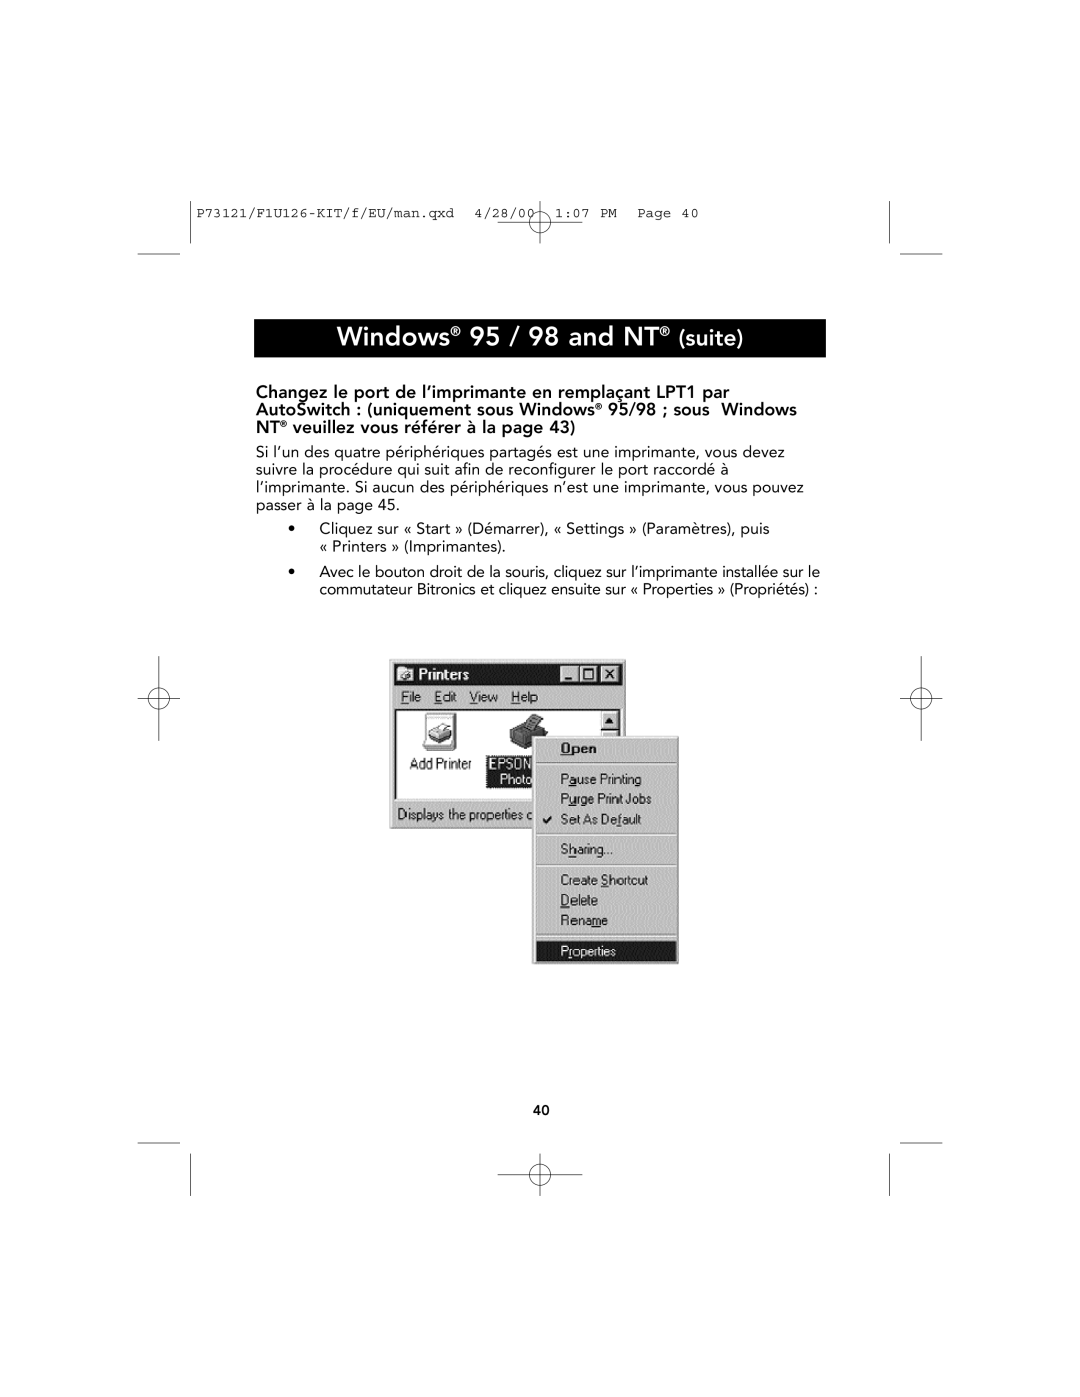 Belkin P73121, F1U126-KIT user manual Windows 95 / 98 and NT suite 